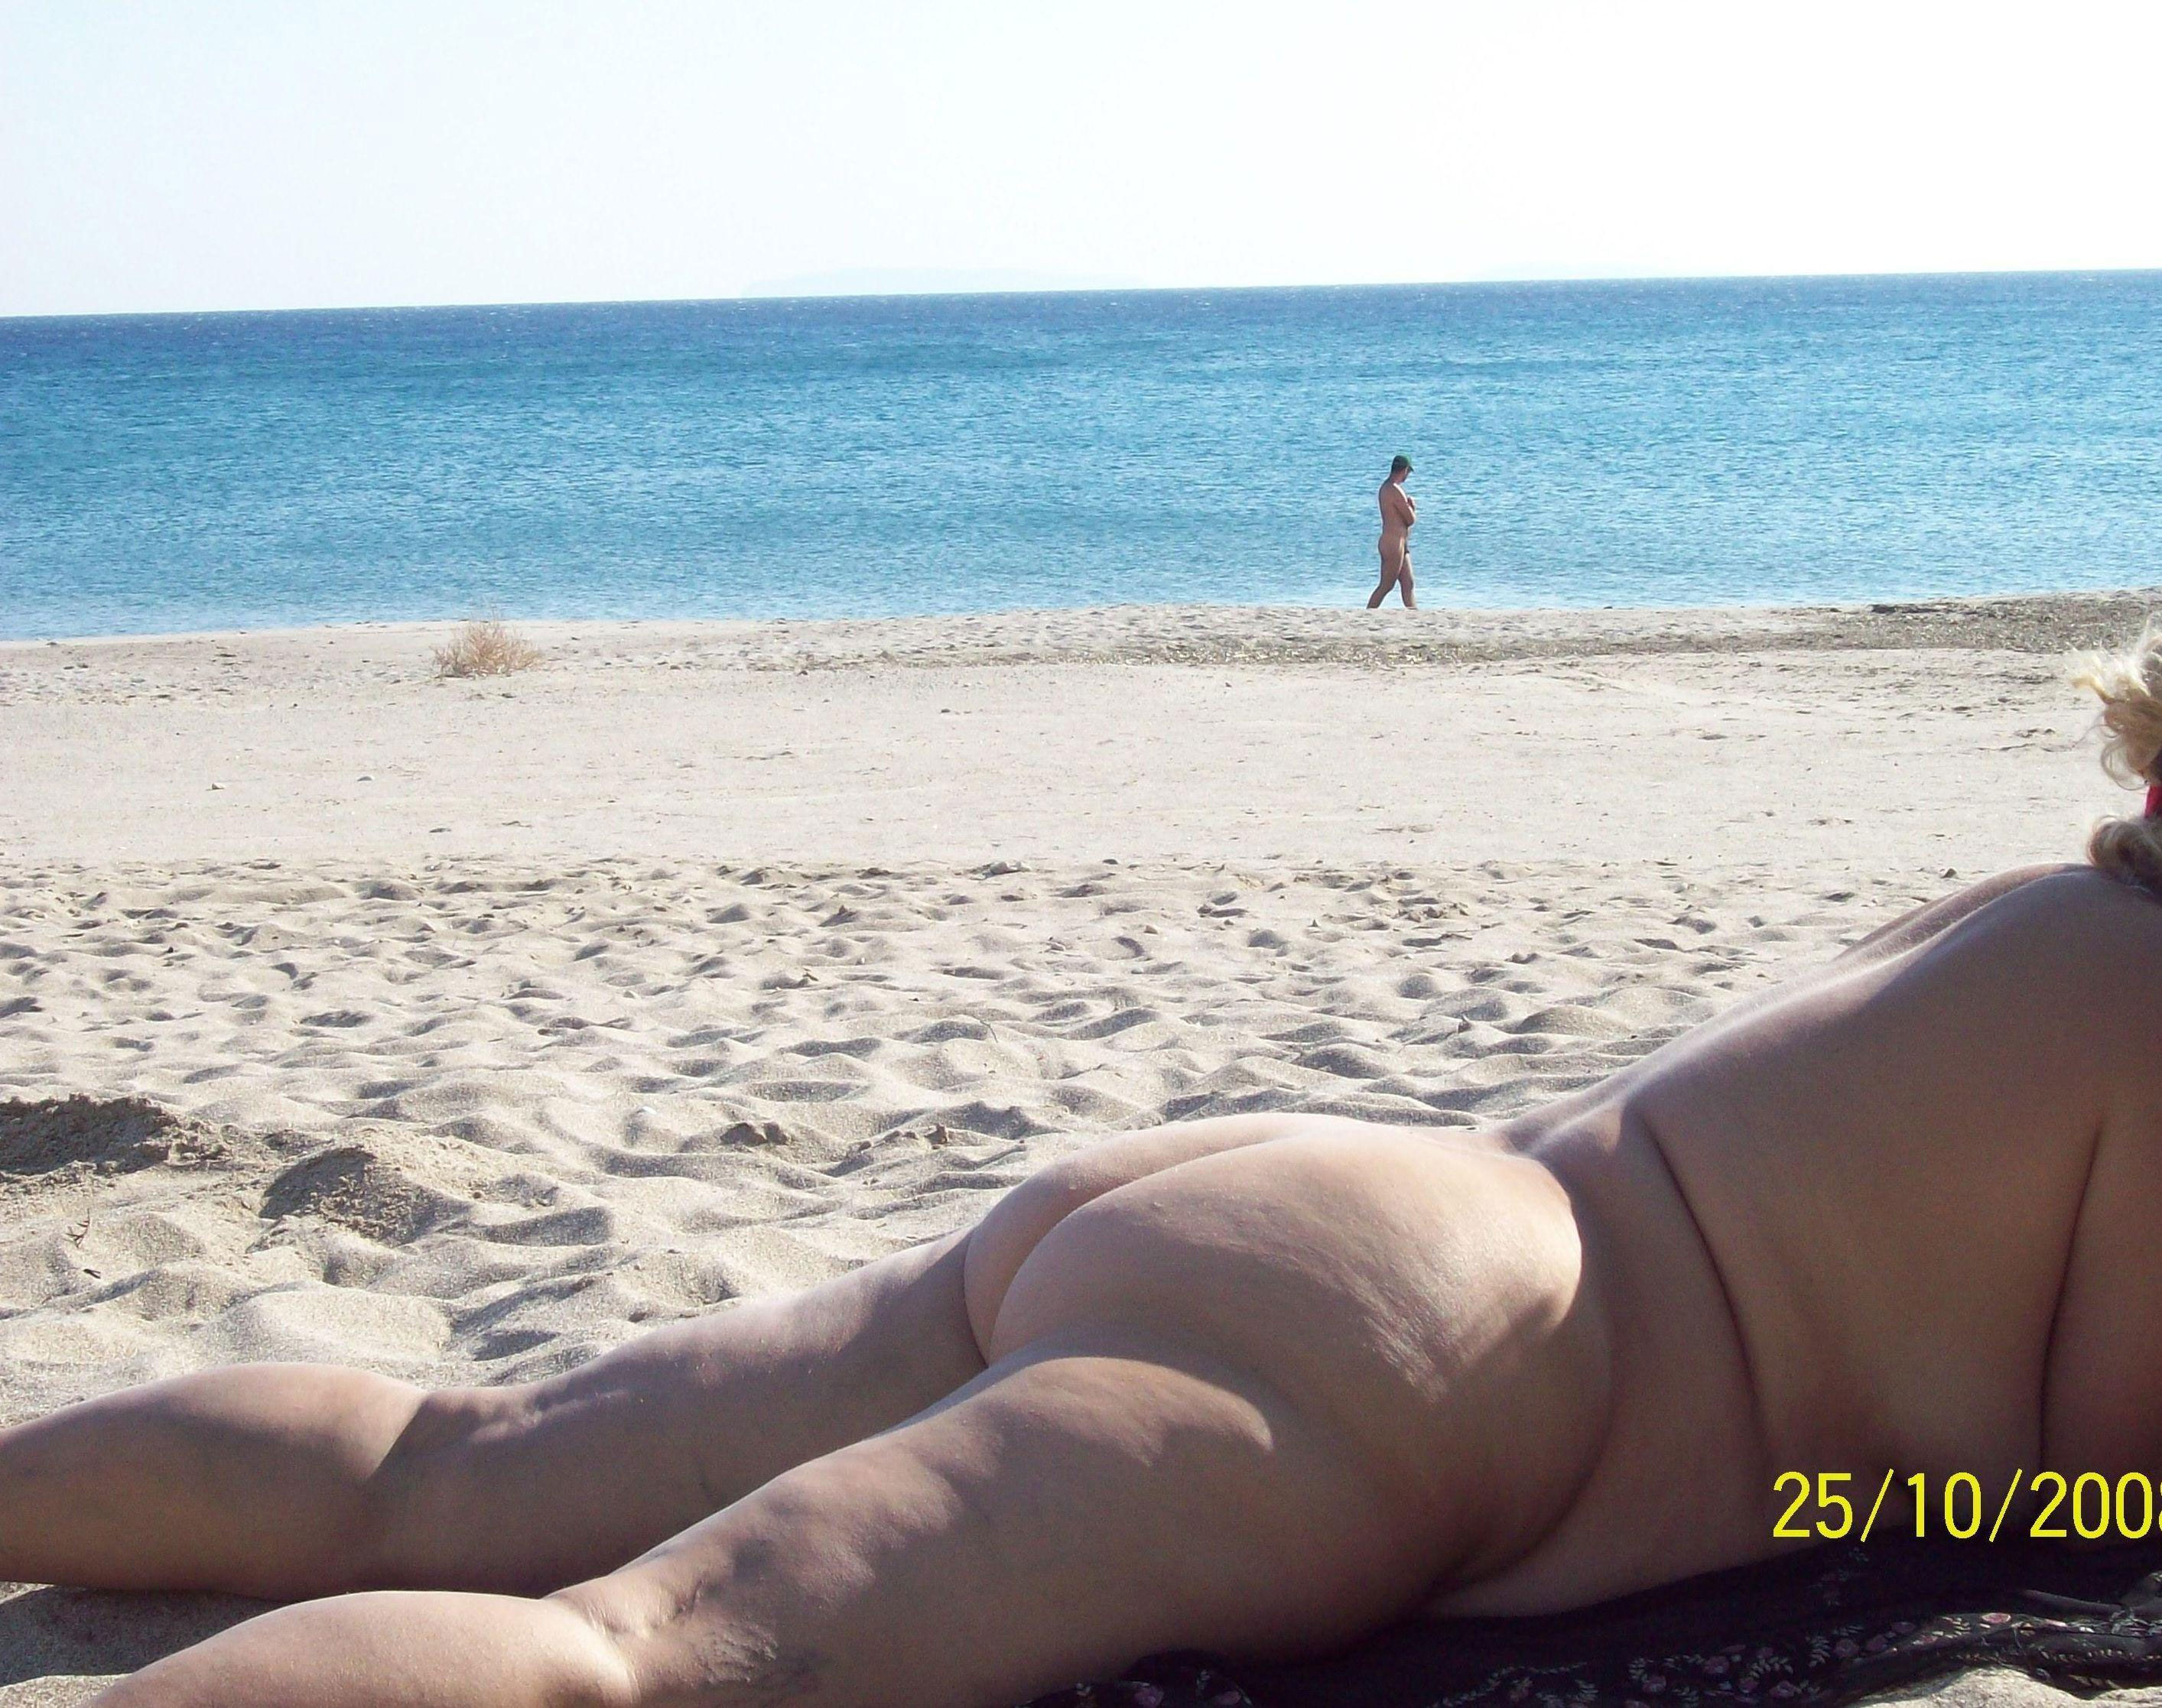 Fat Granny Beach Nudist - Fat nudist moms and grannies sunbathing nude on beach